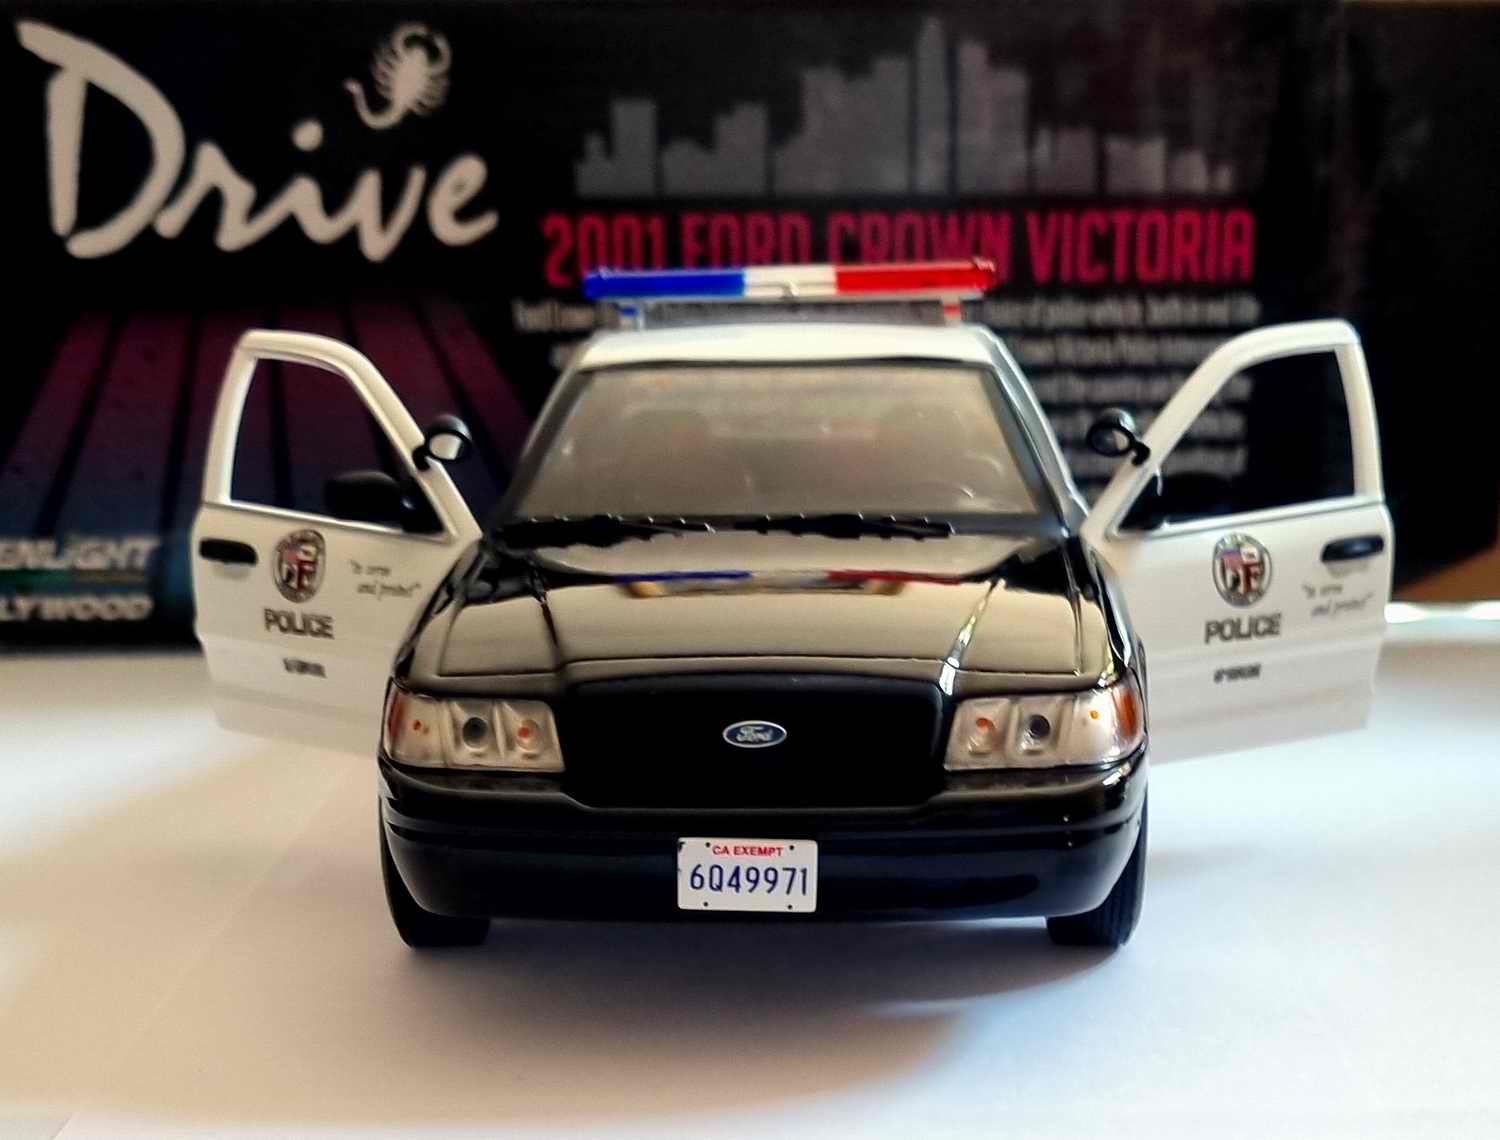 Voiture FORD Crown Victoria Interceptor 2001 LAPD LOS ANGELES POLICE DEPARTMENT Du Film DRIVE 1/24